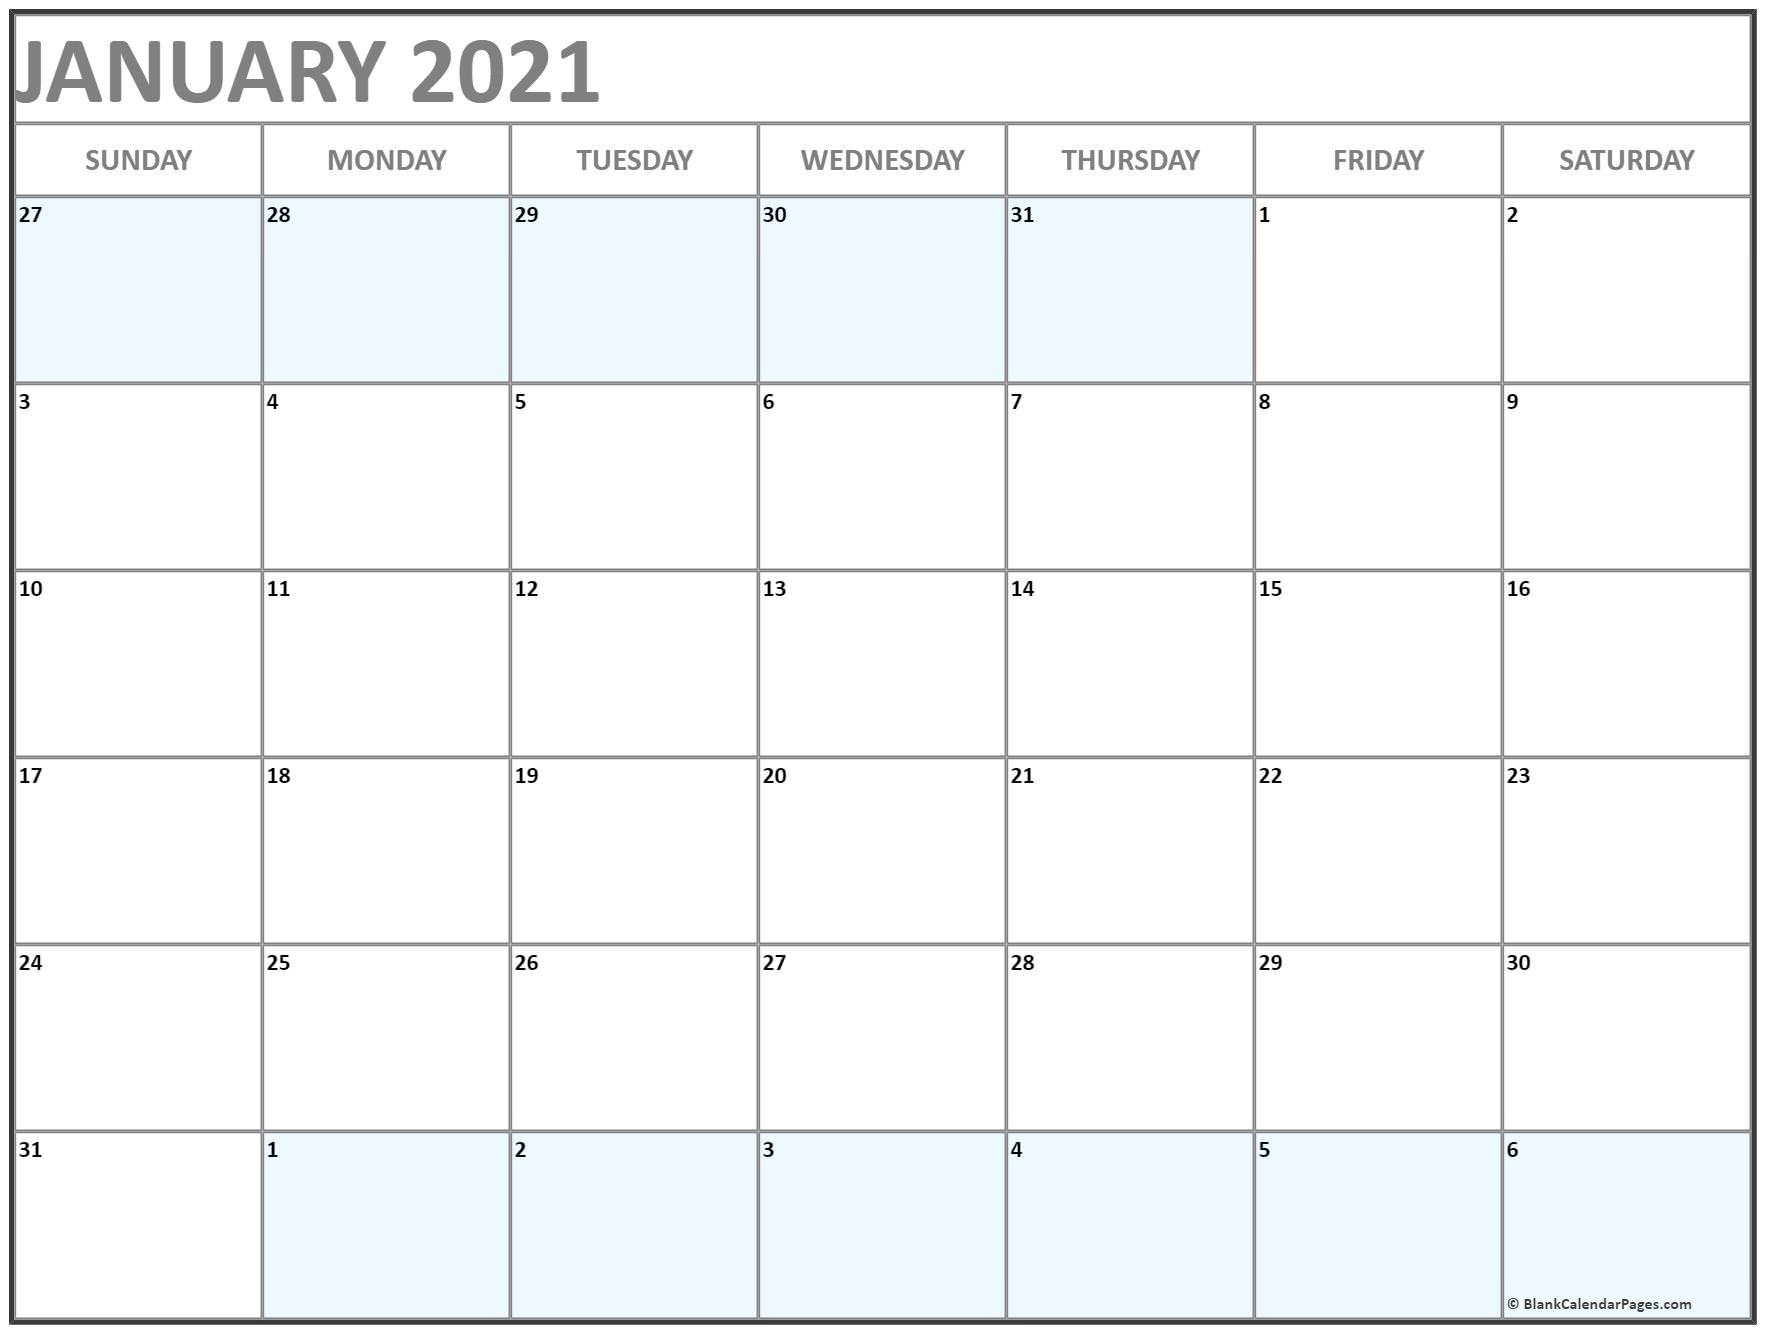 January 2021 Blank Calendar Collection.